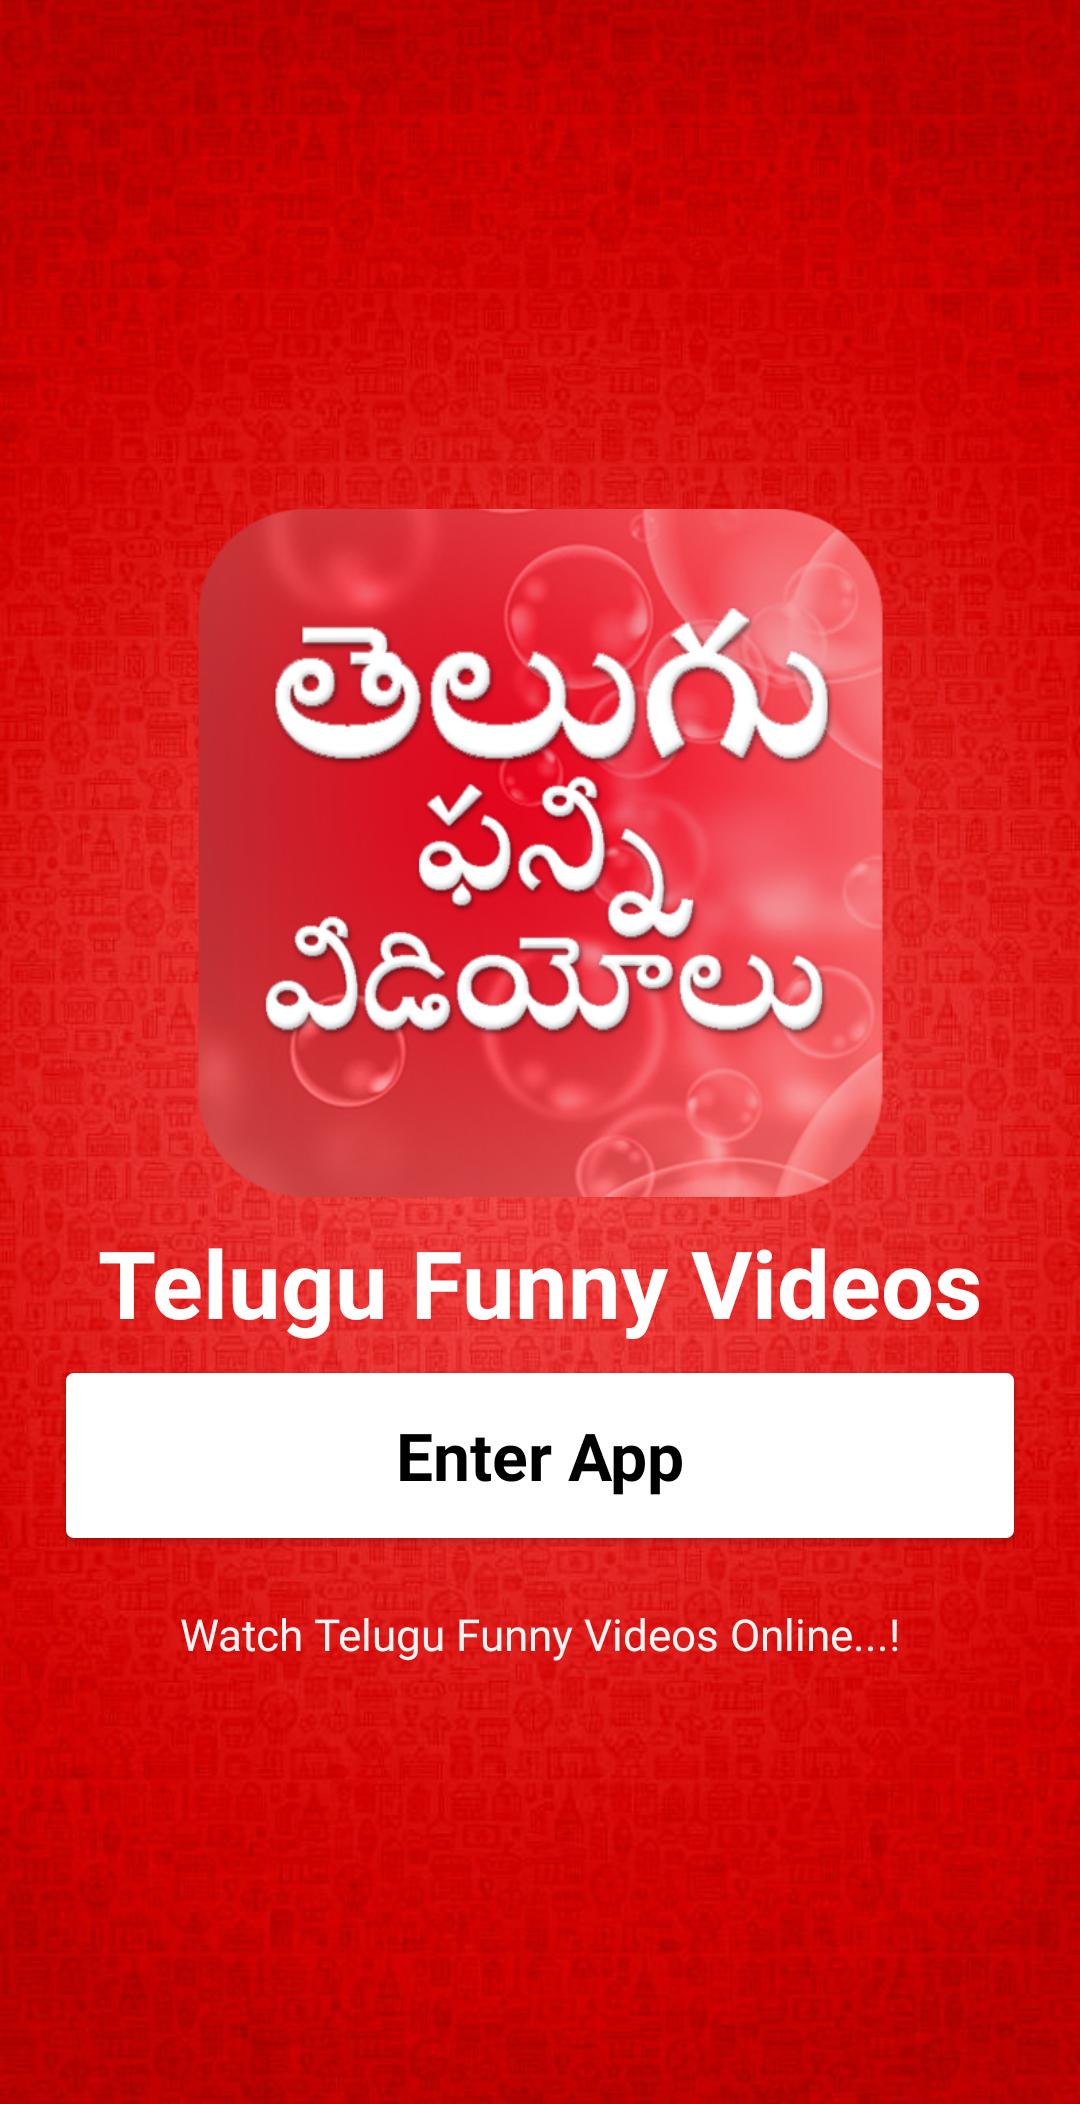 TELUGU FUNNY VIDEOS - తెలుగు ఫన్నీ వీడియోలు APK for Android Download